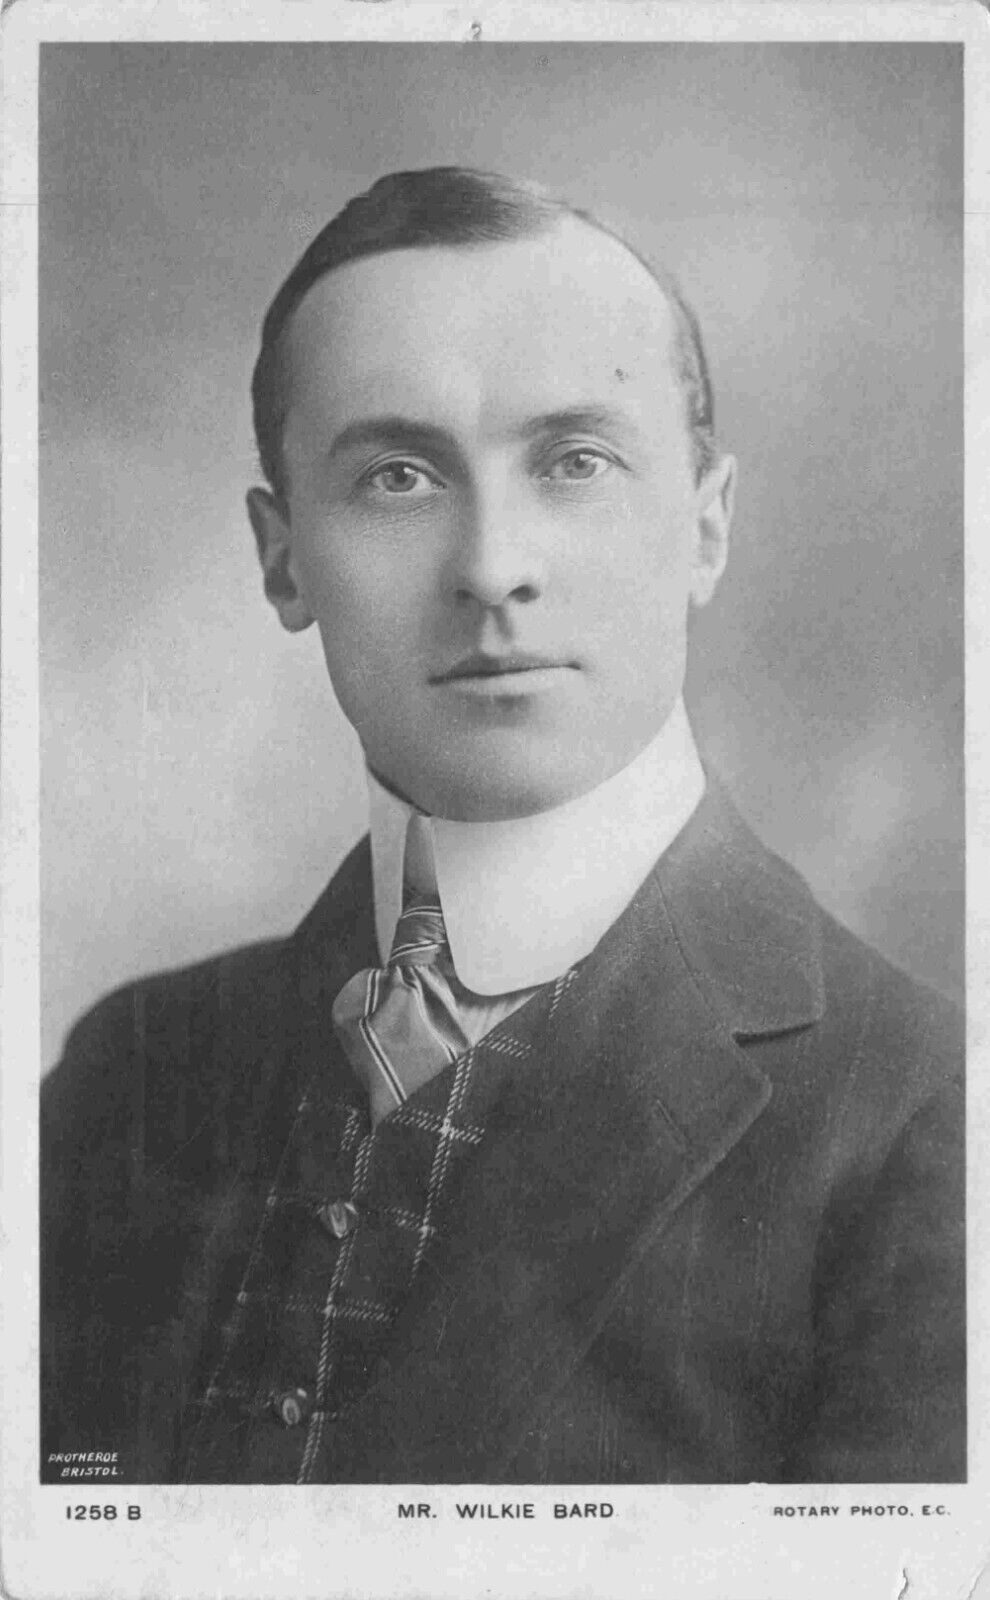 1908 RPPC British Vaudeville Actor Singer Wilkie Bard Rotary Photograph Postcard